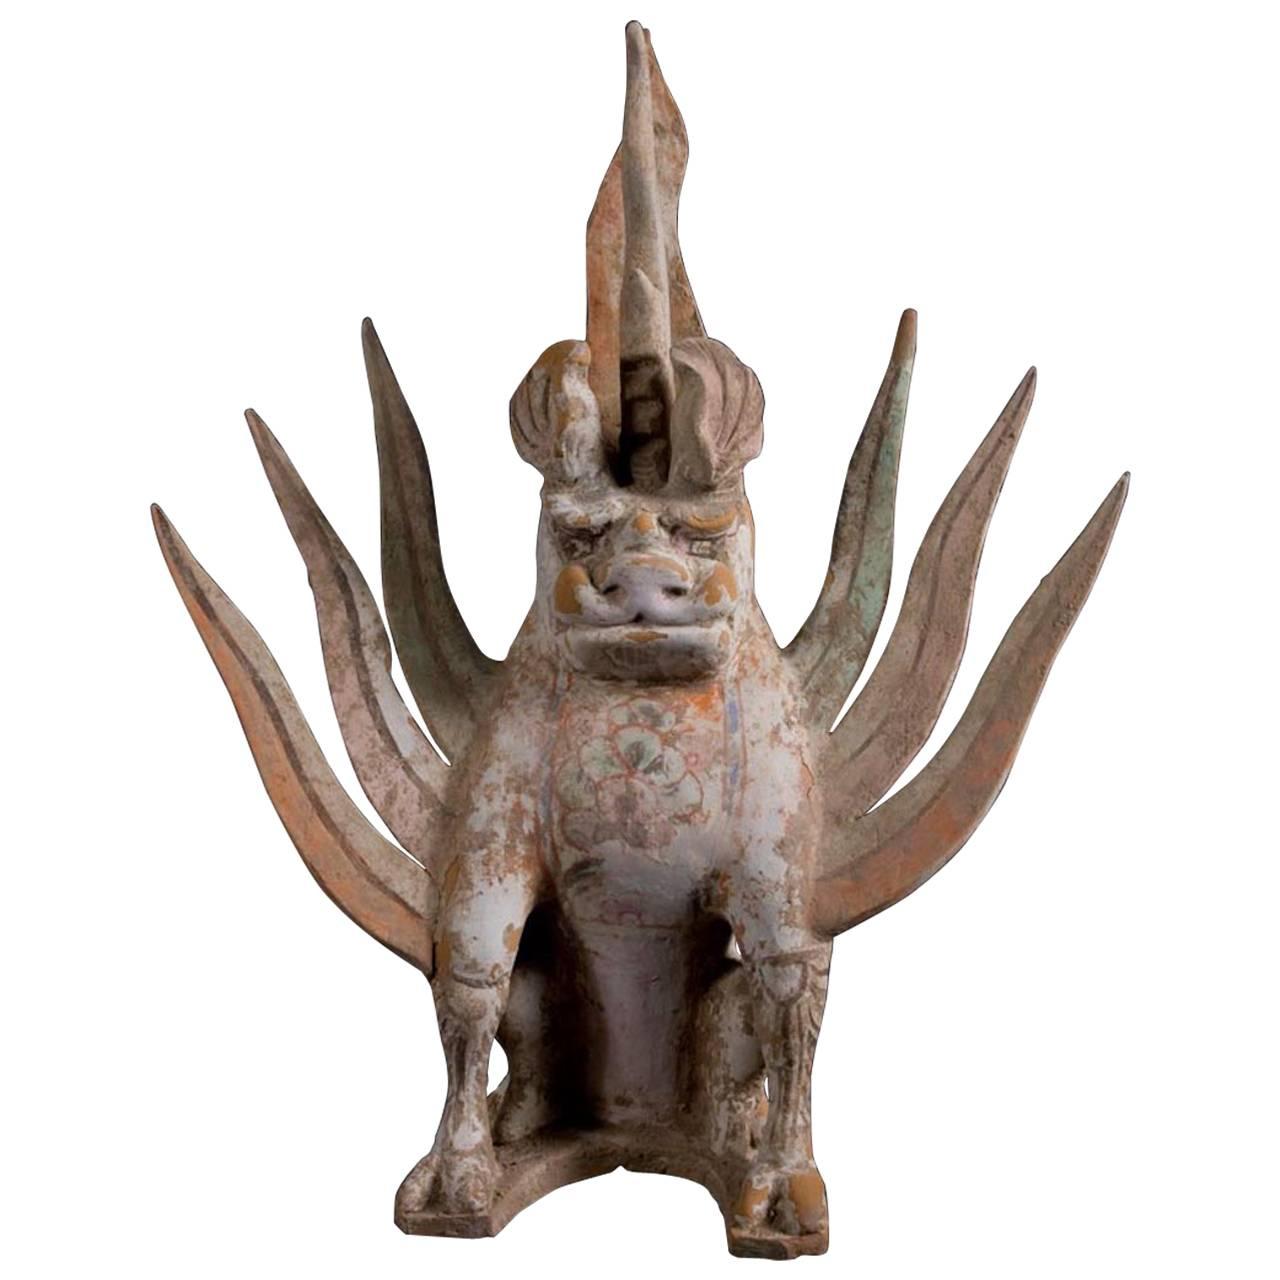 Chimera (Pixiu) Terracotta Mythological Being - Tang Dynasty, China '618-907 AD'